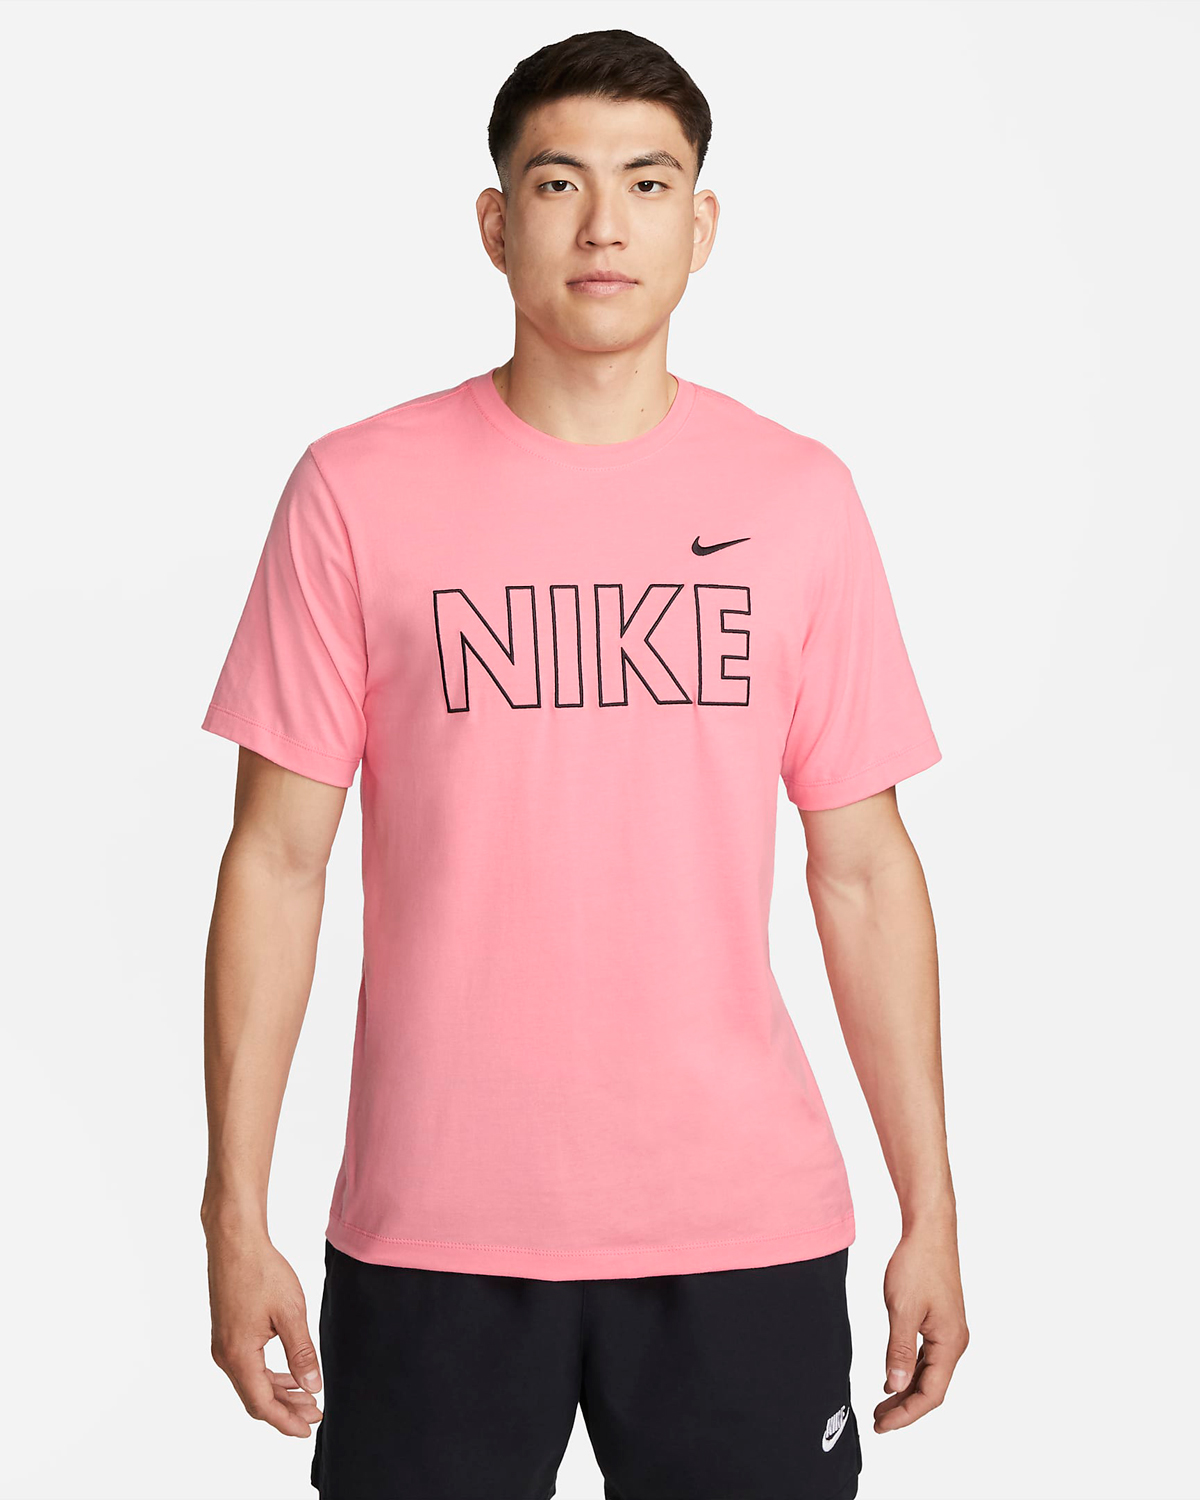 Nike-Sportswear-T-Shirt-Coral-Chalk